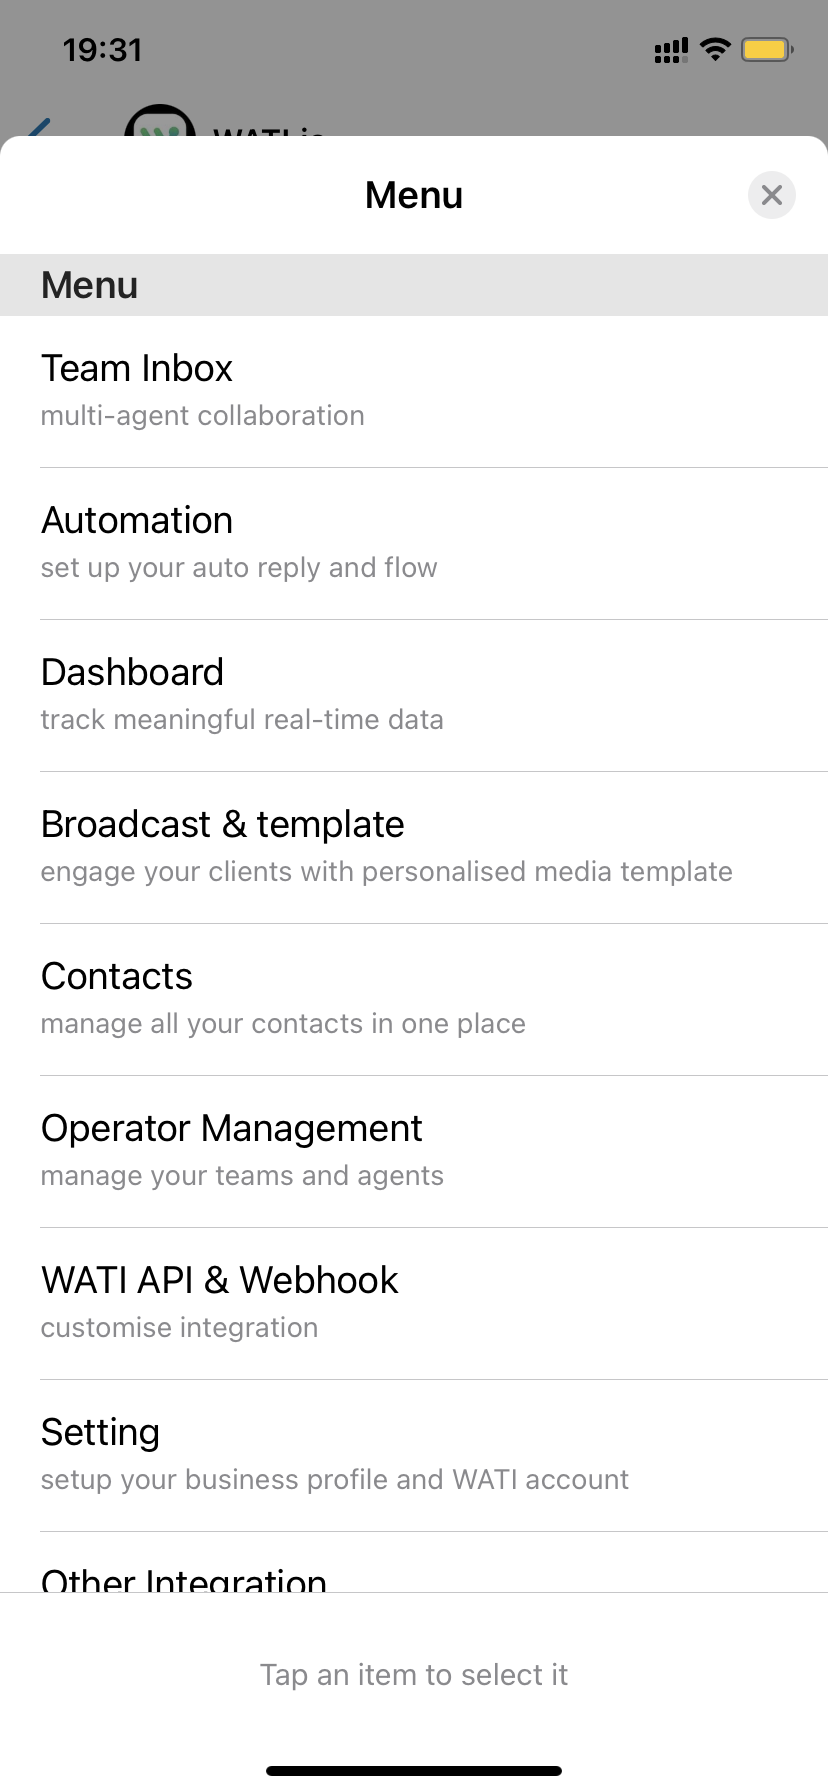 WATI - WhatsApp Team Inbox - API WhatsApp - CRM WhatsApp - Mensagens Interativas WhatsApp